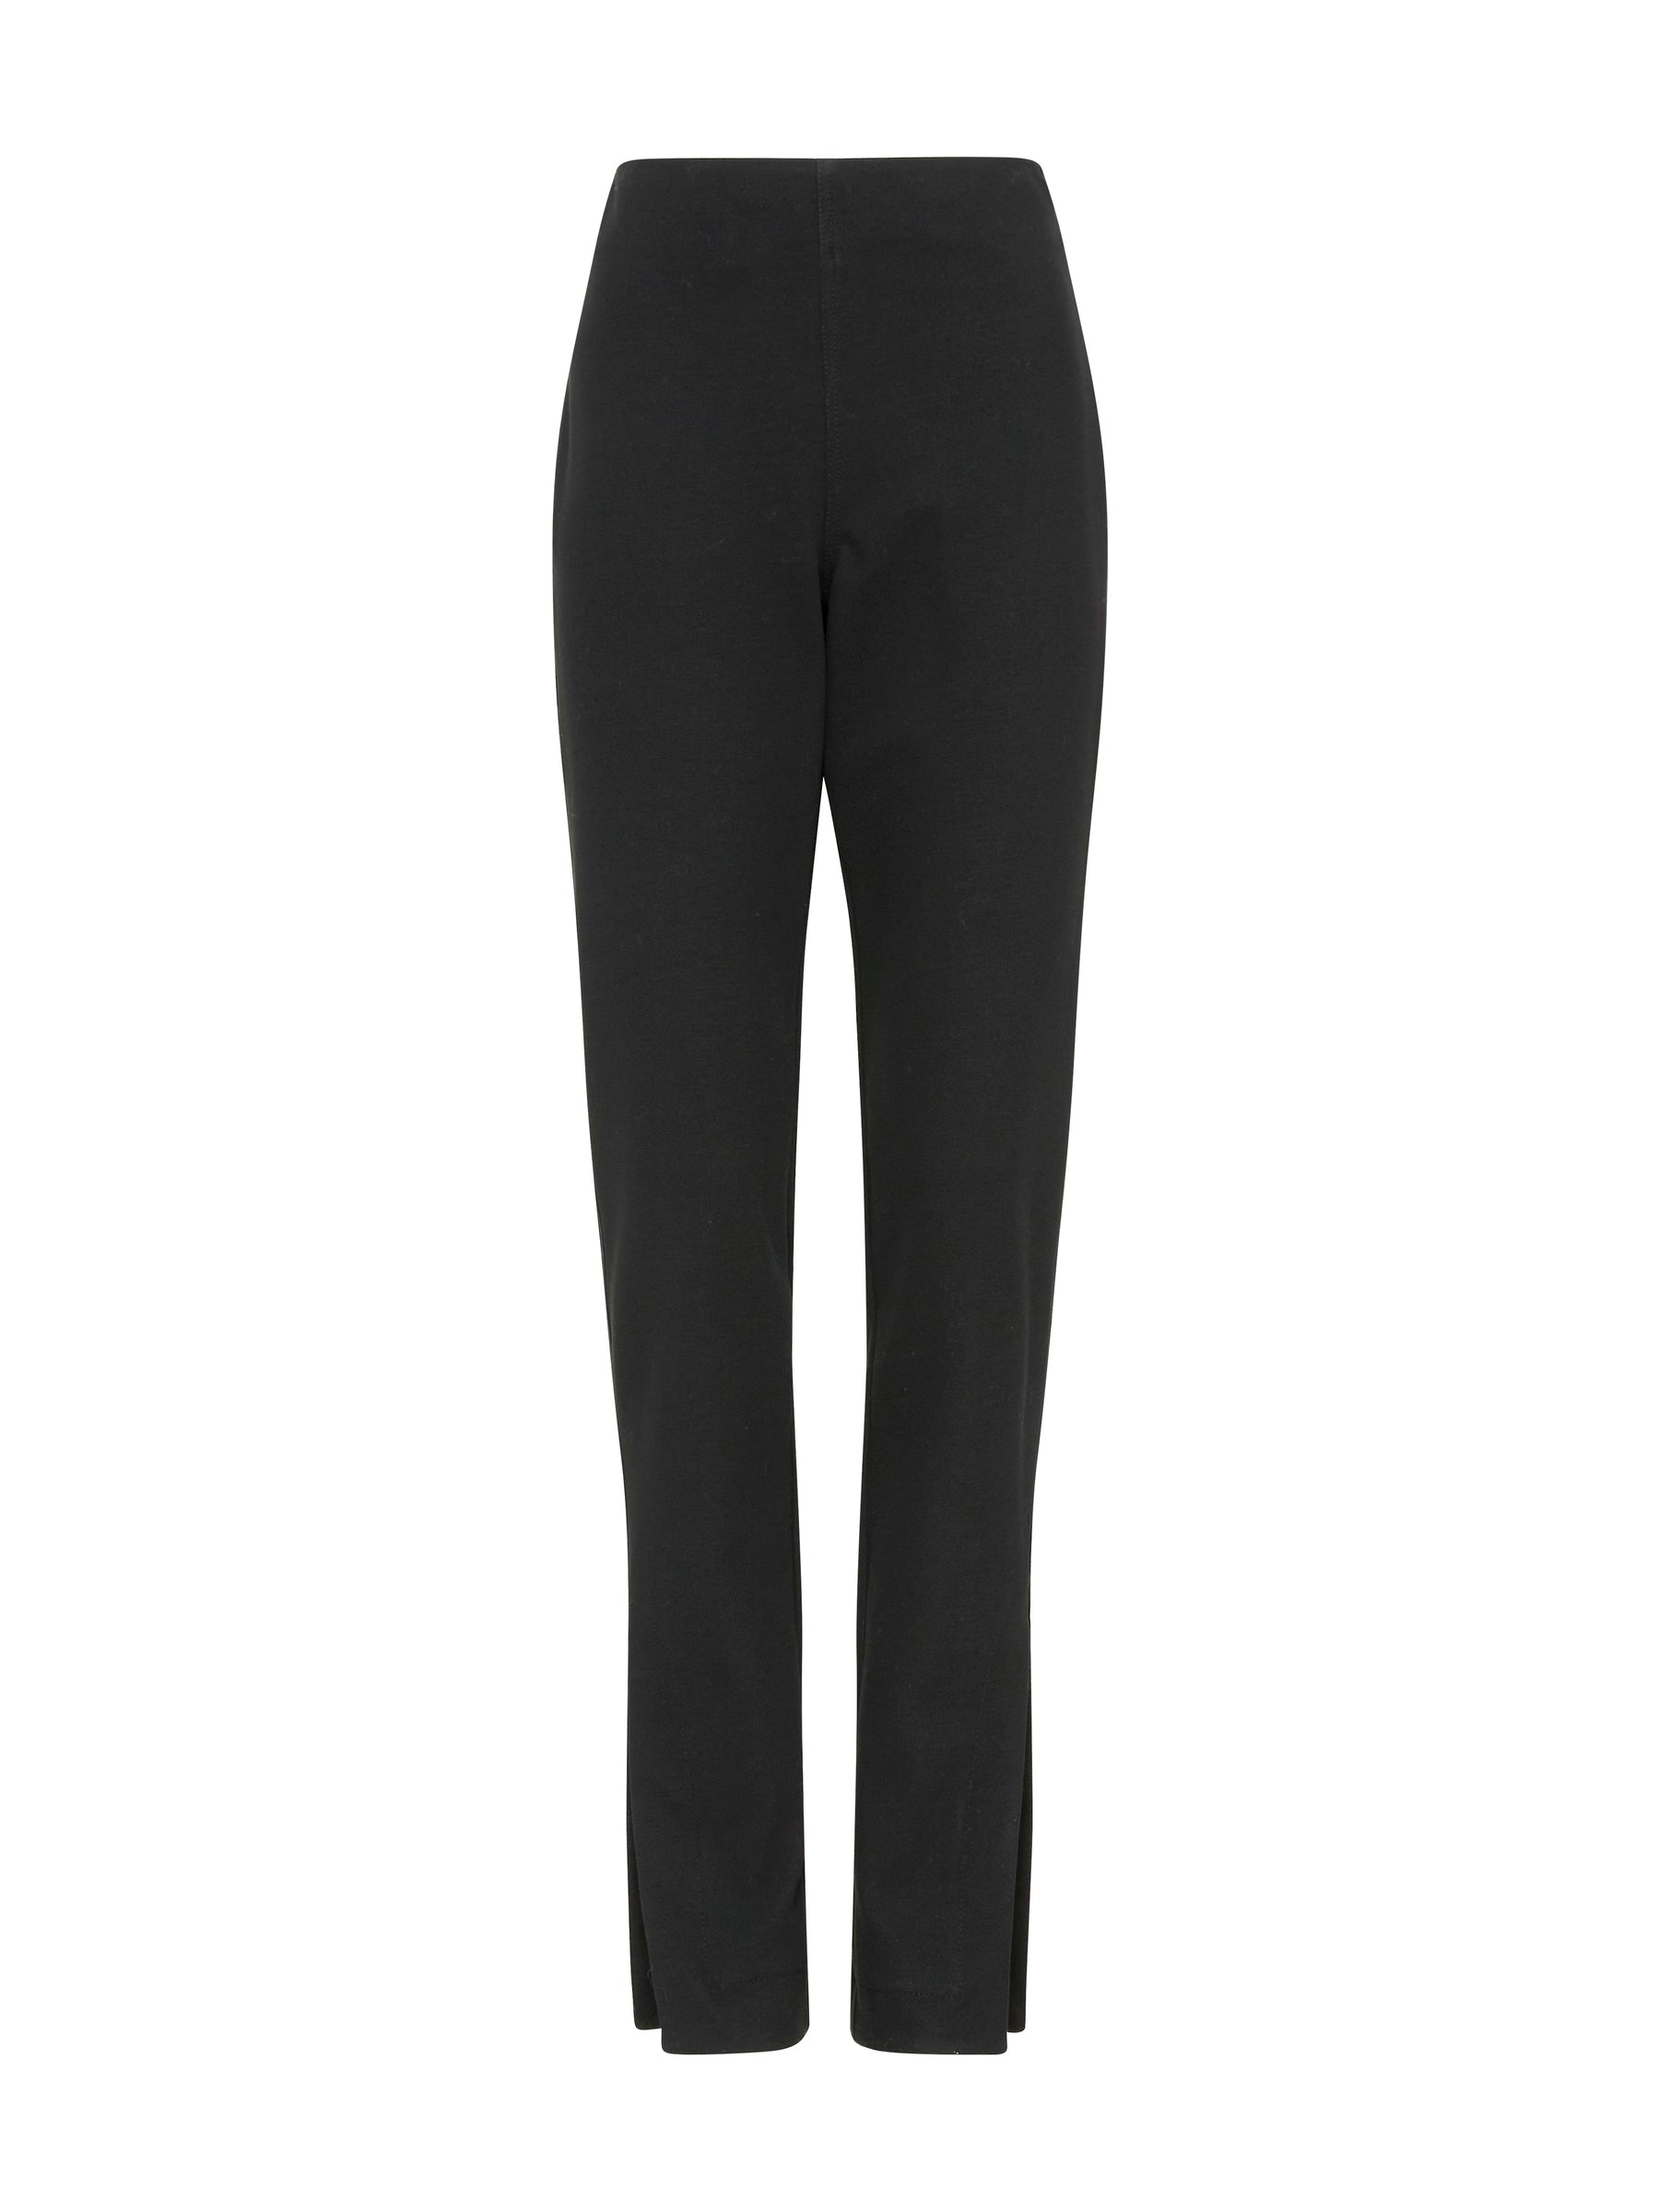 Devi Side-Split Stretch Pant (Regular)  Stretch pants, Splits stretches,  Black pants